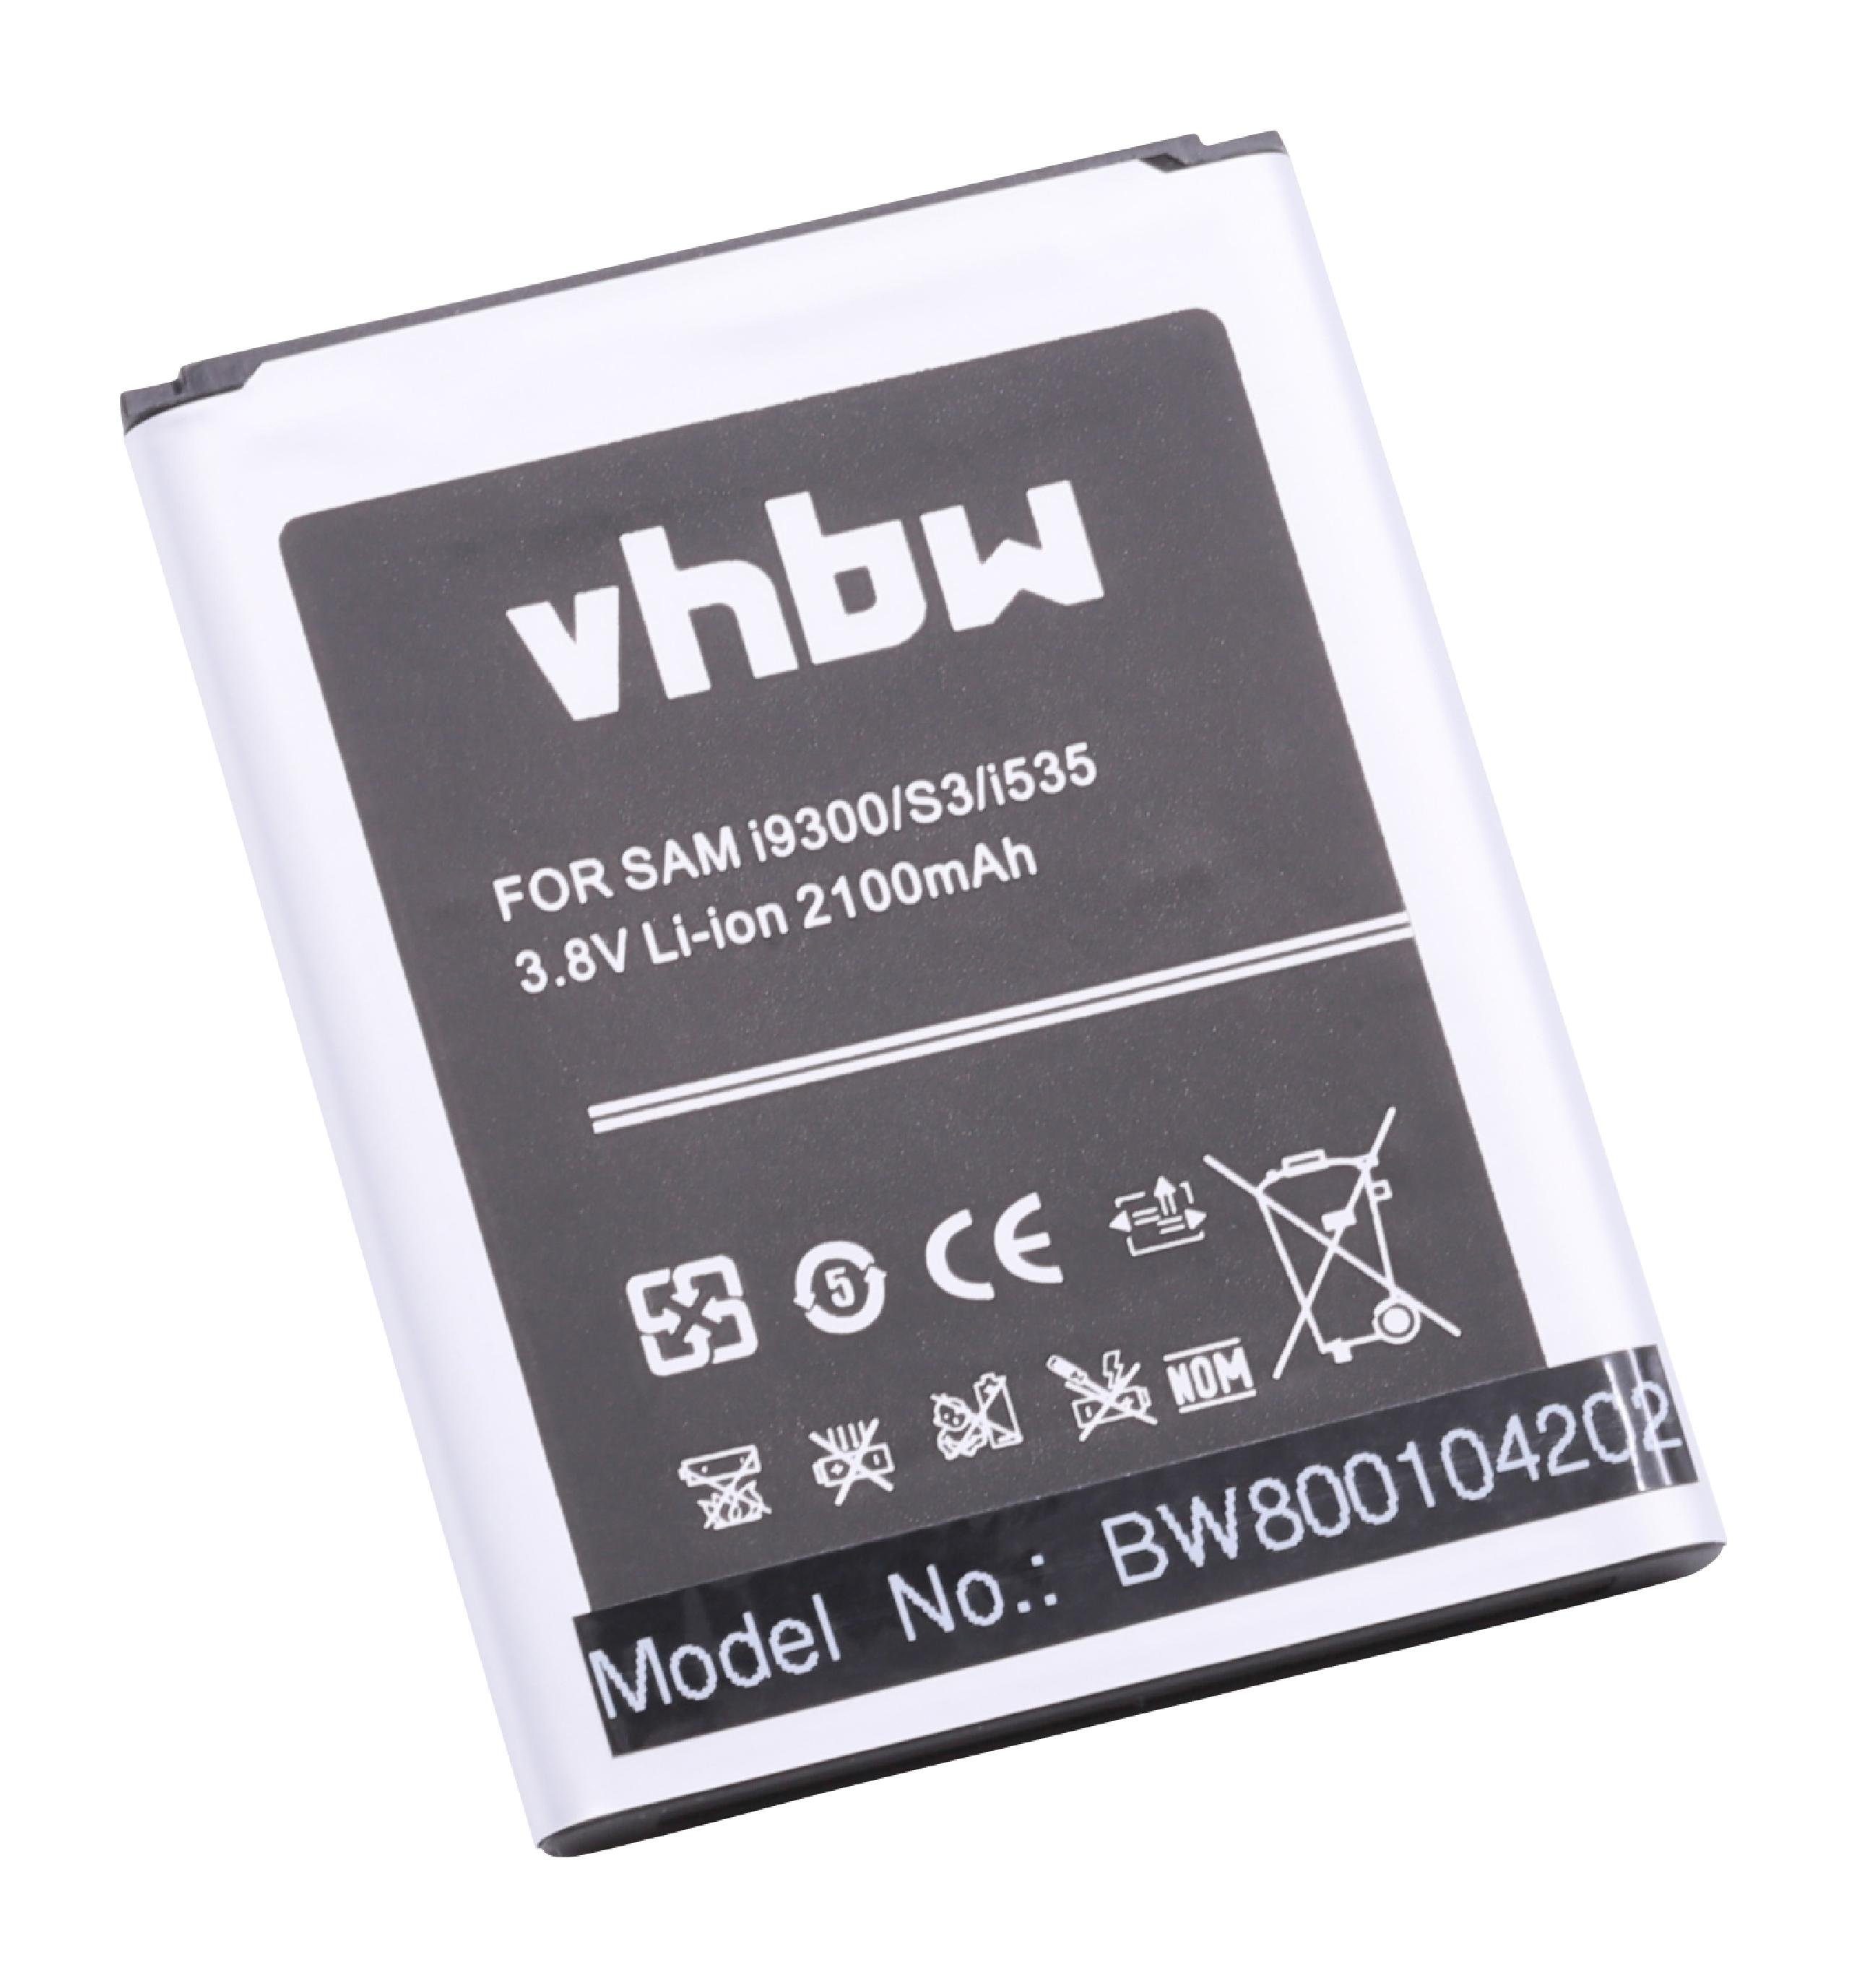 vhbw passend für Samsung Progre 4G LTE, SC-03E, SCH-J021, SCH-R530, Smartphone-Akku 2100 mAh